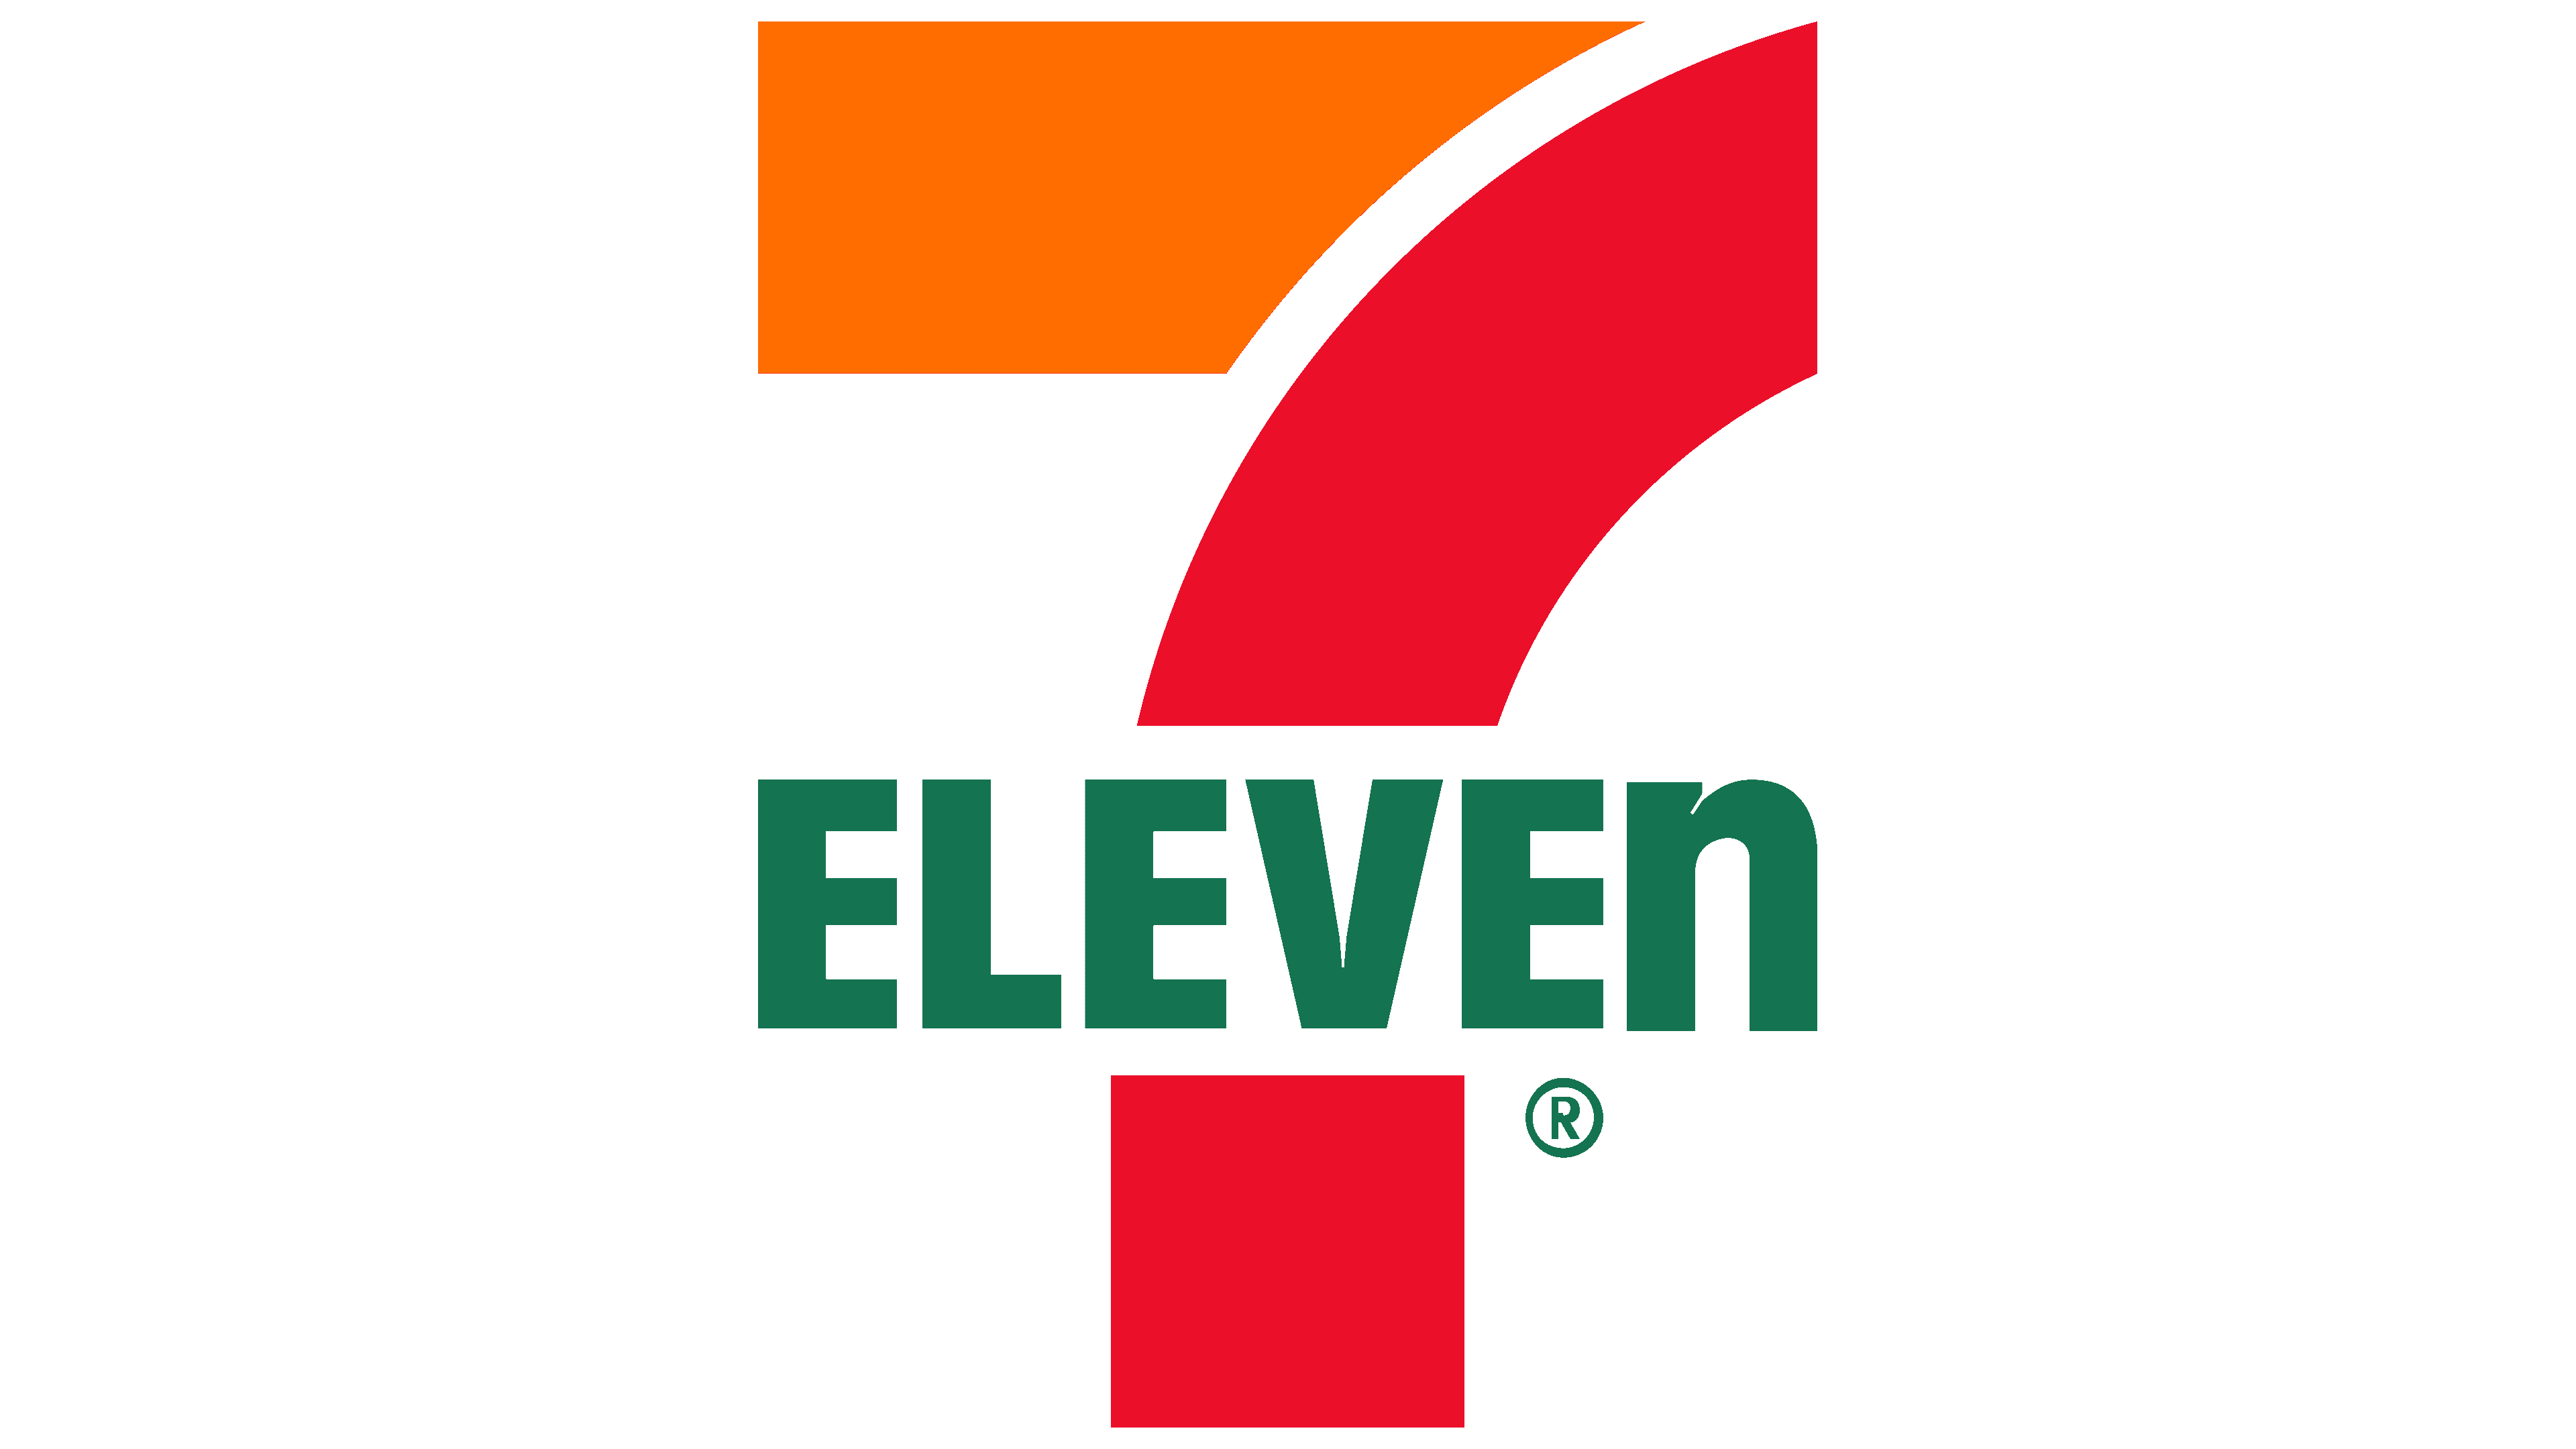 7 eleven company background